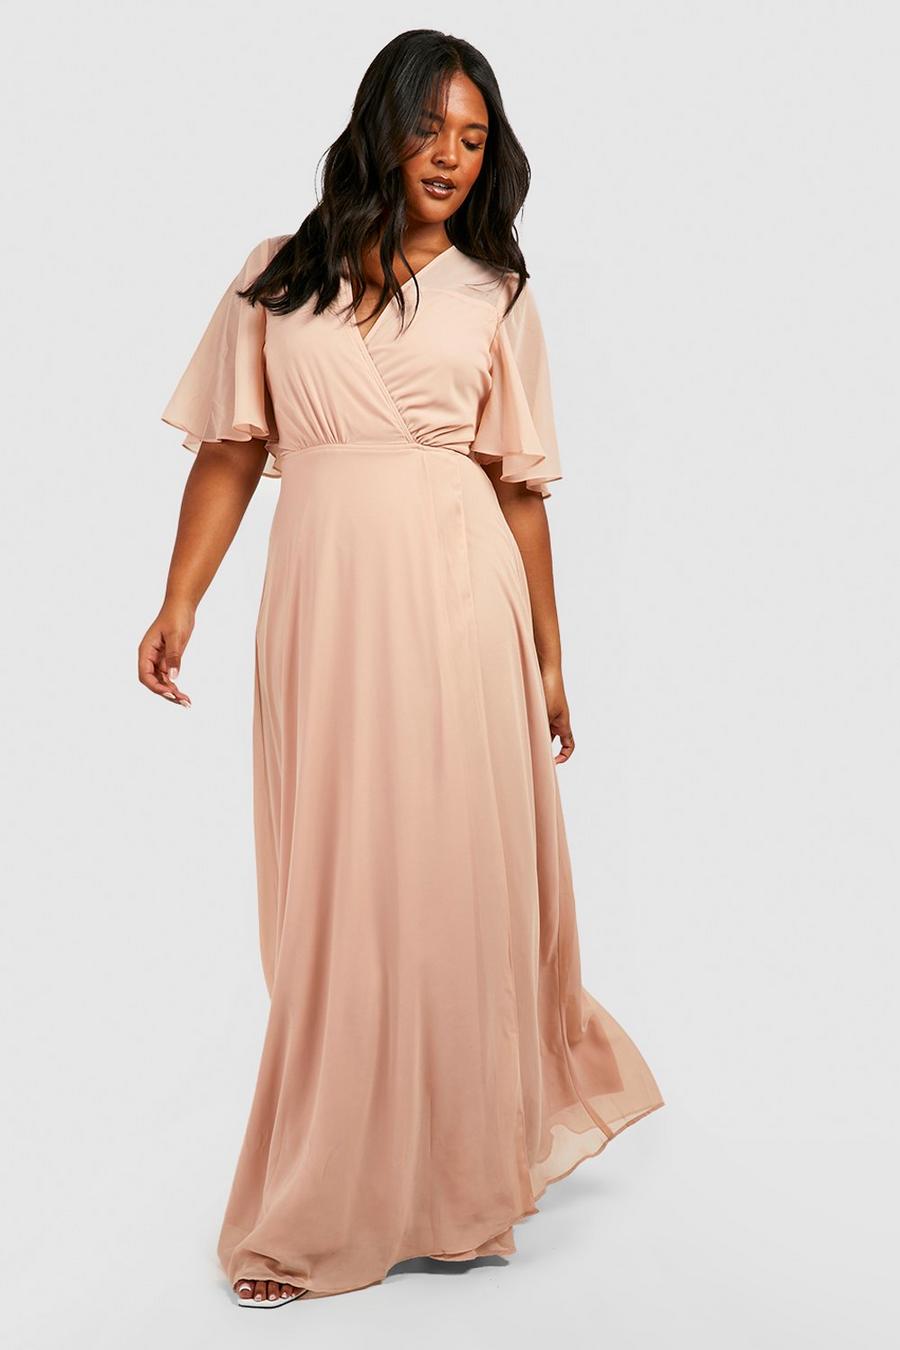 Blush rose Plus Angel Sleeve Wrap Bridesmaid Dress